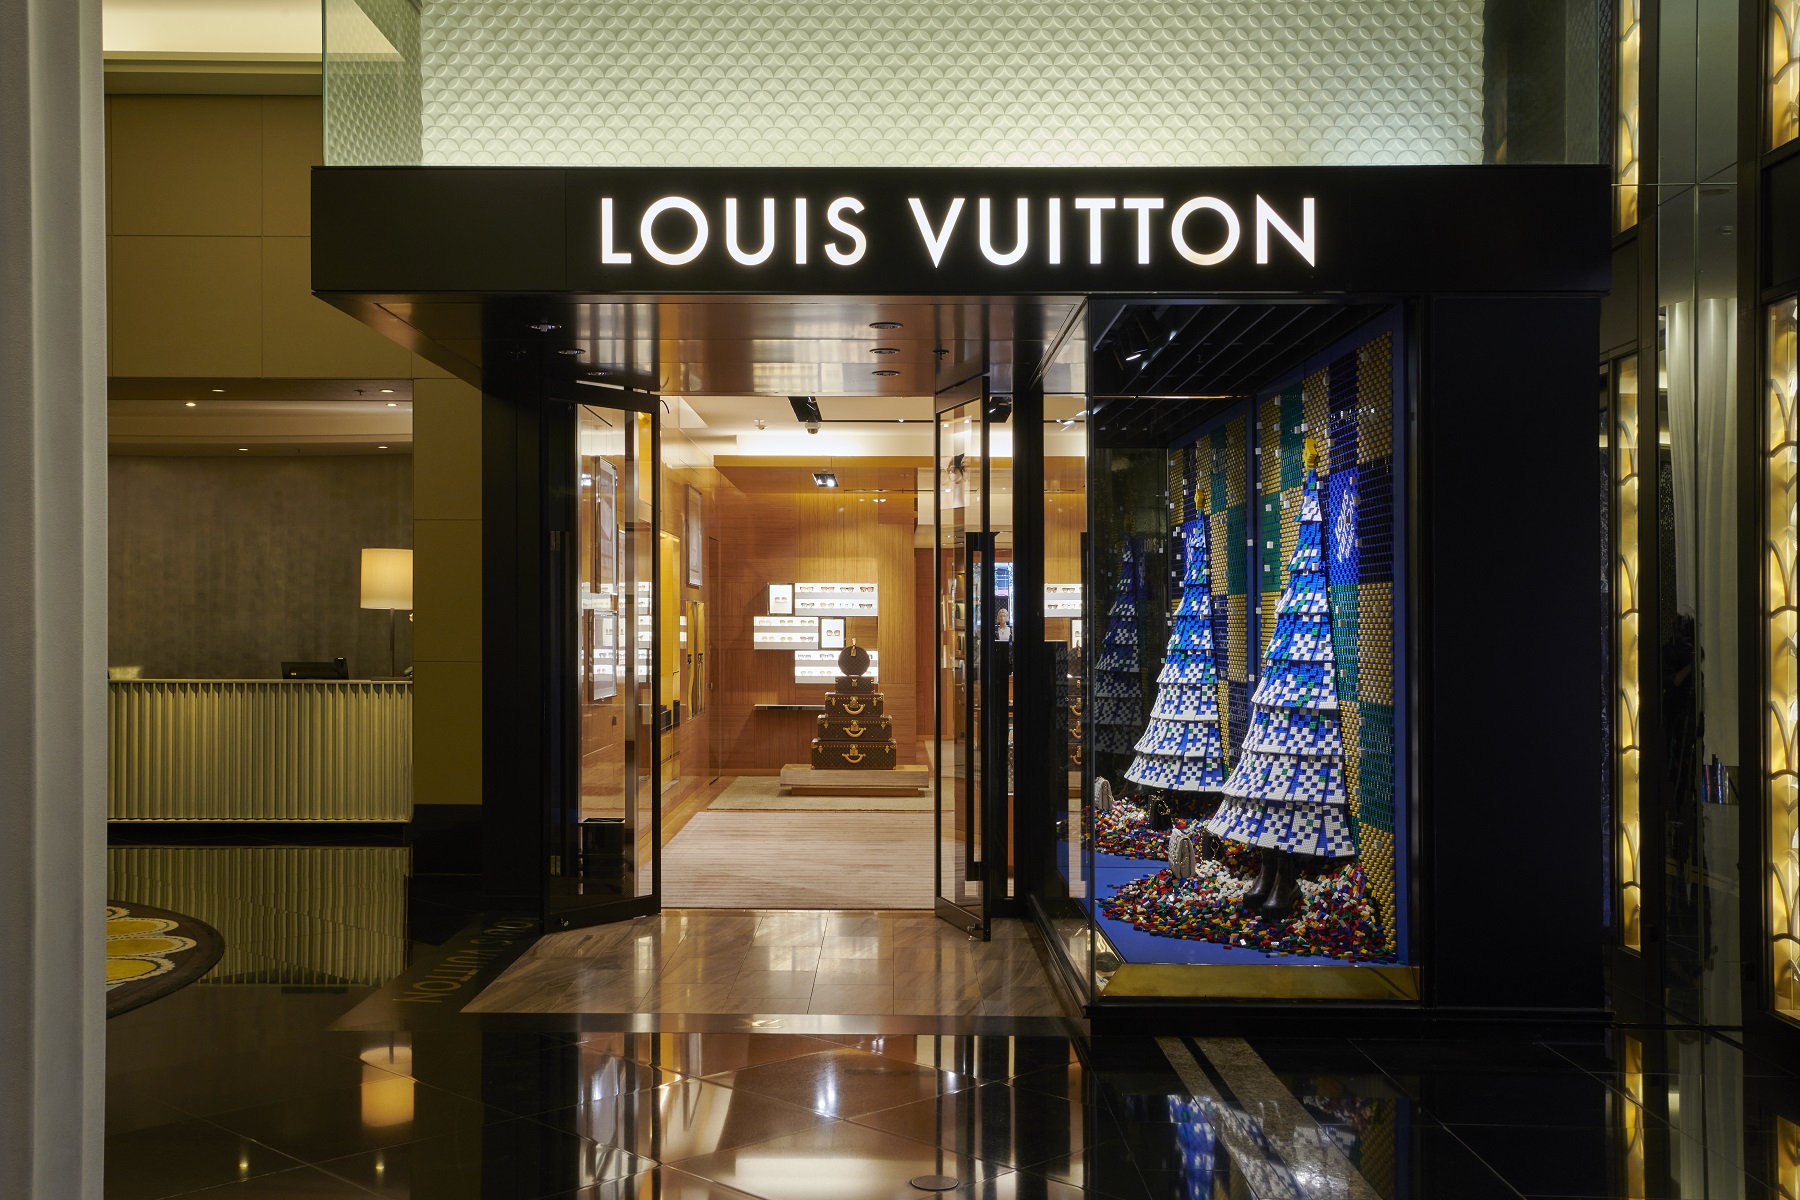 The Luis Vuitton Store in Collins Street Melbourne Victoria Australia Stock  Photo - Alamy